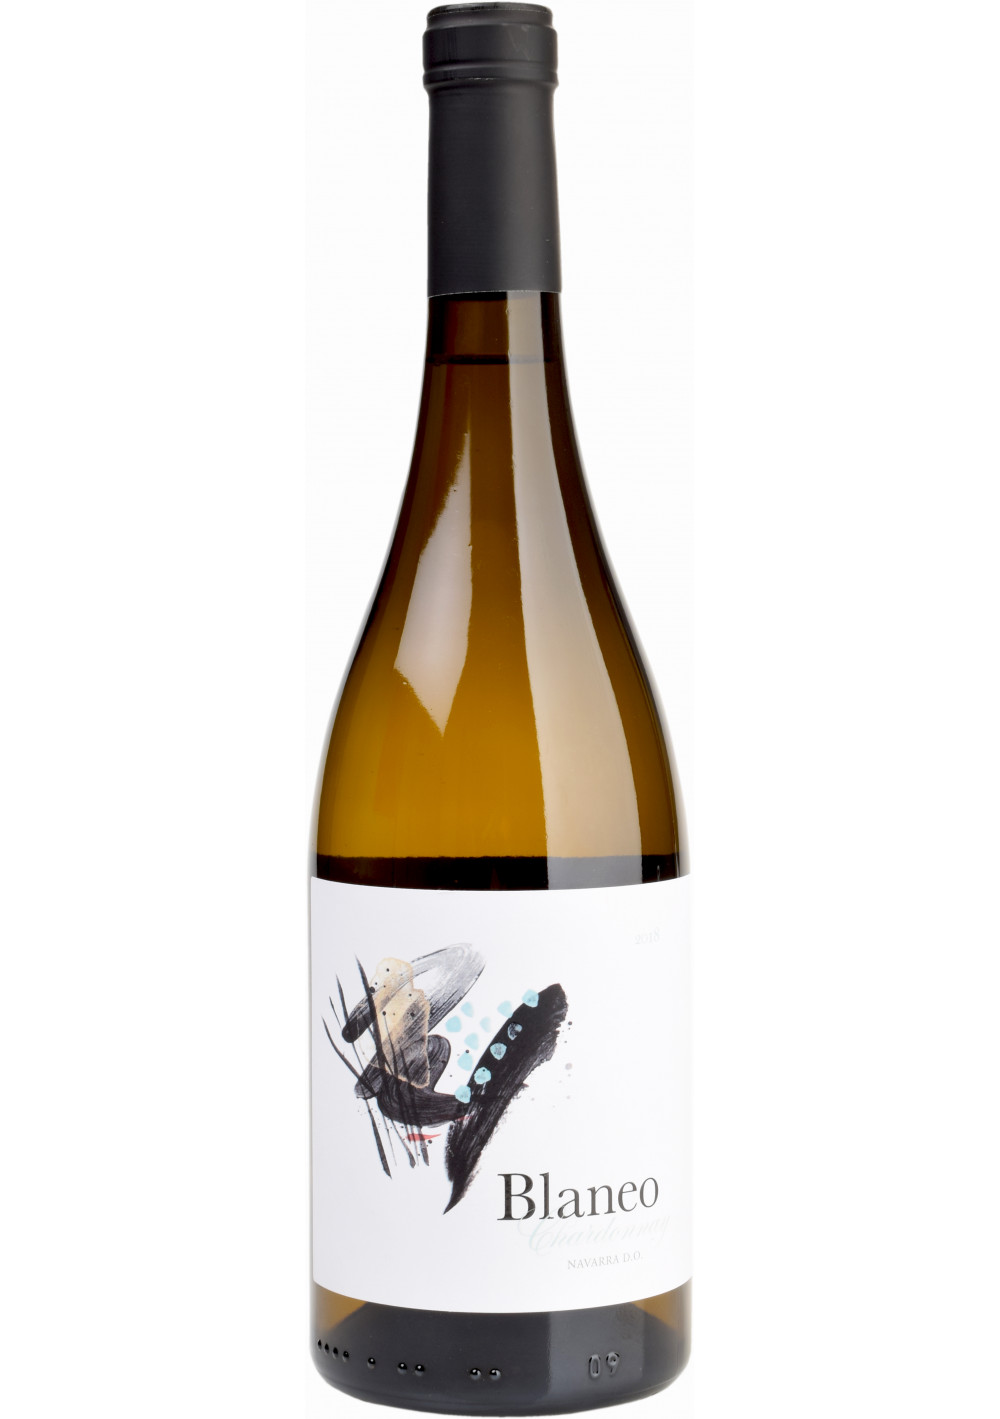 Blaneo Chardonnay 2018 Pagos de Araiz Navarra